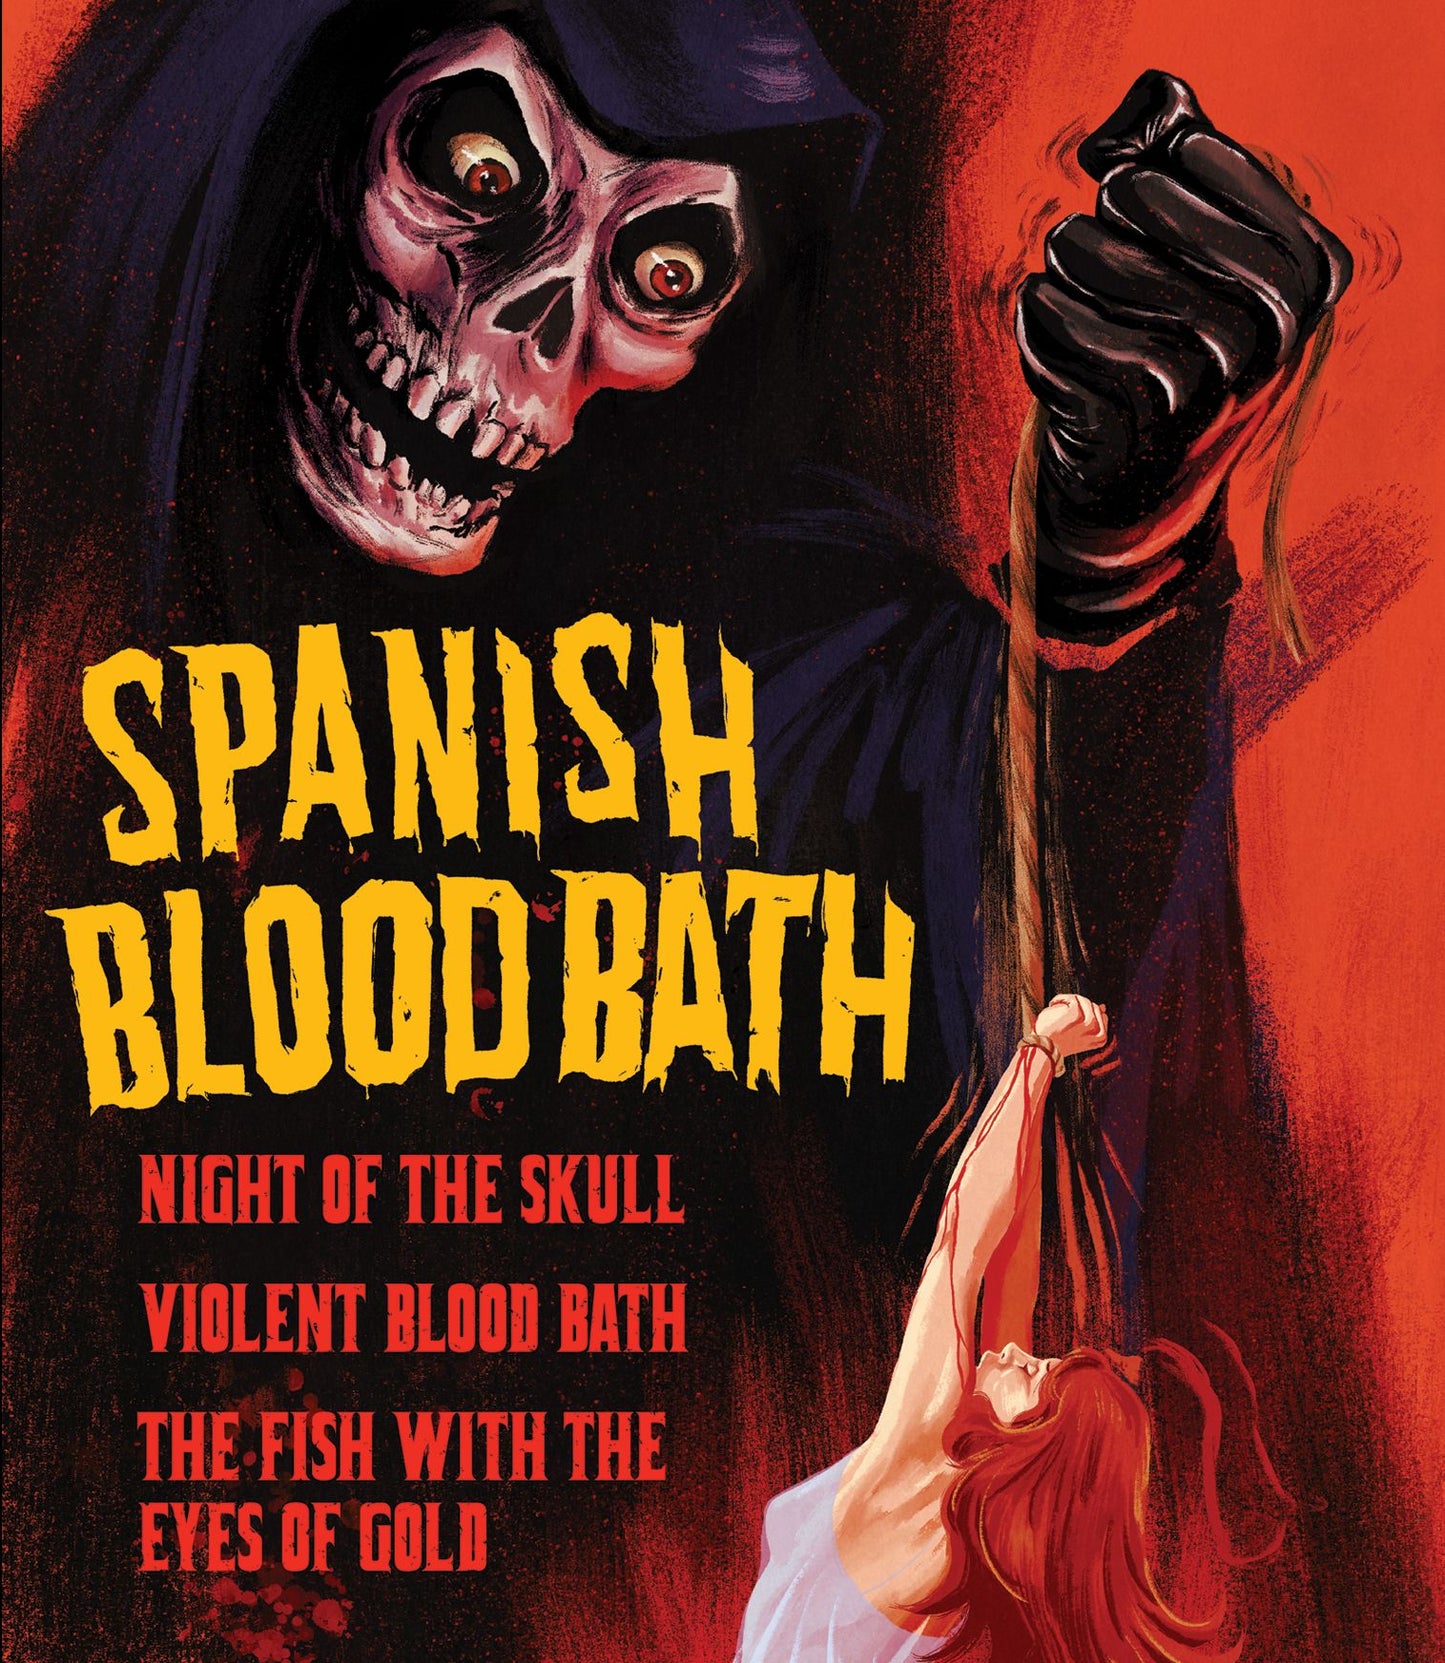 Spanish Blood Bath Limited Edition Vinegar Syndrome Blu-Ray Box Set [PRE-ORDER] [SLIPCOVER]